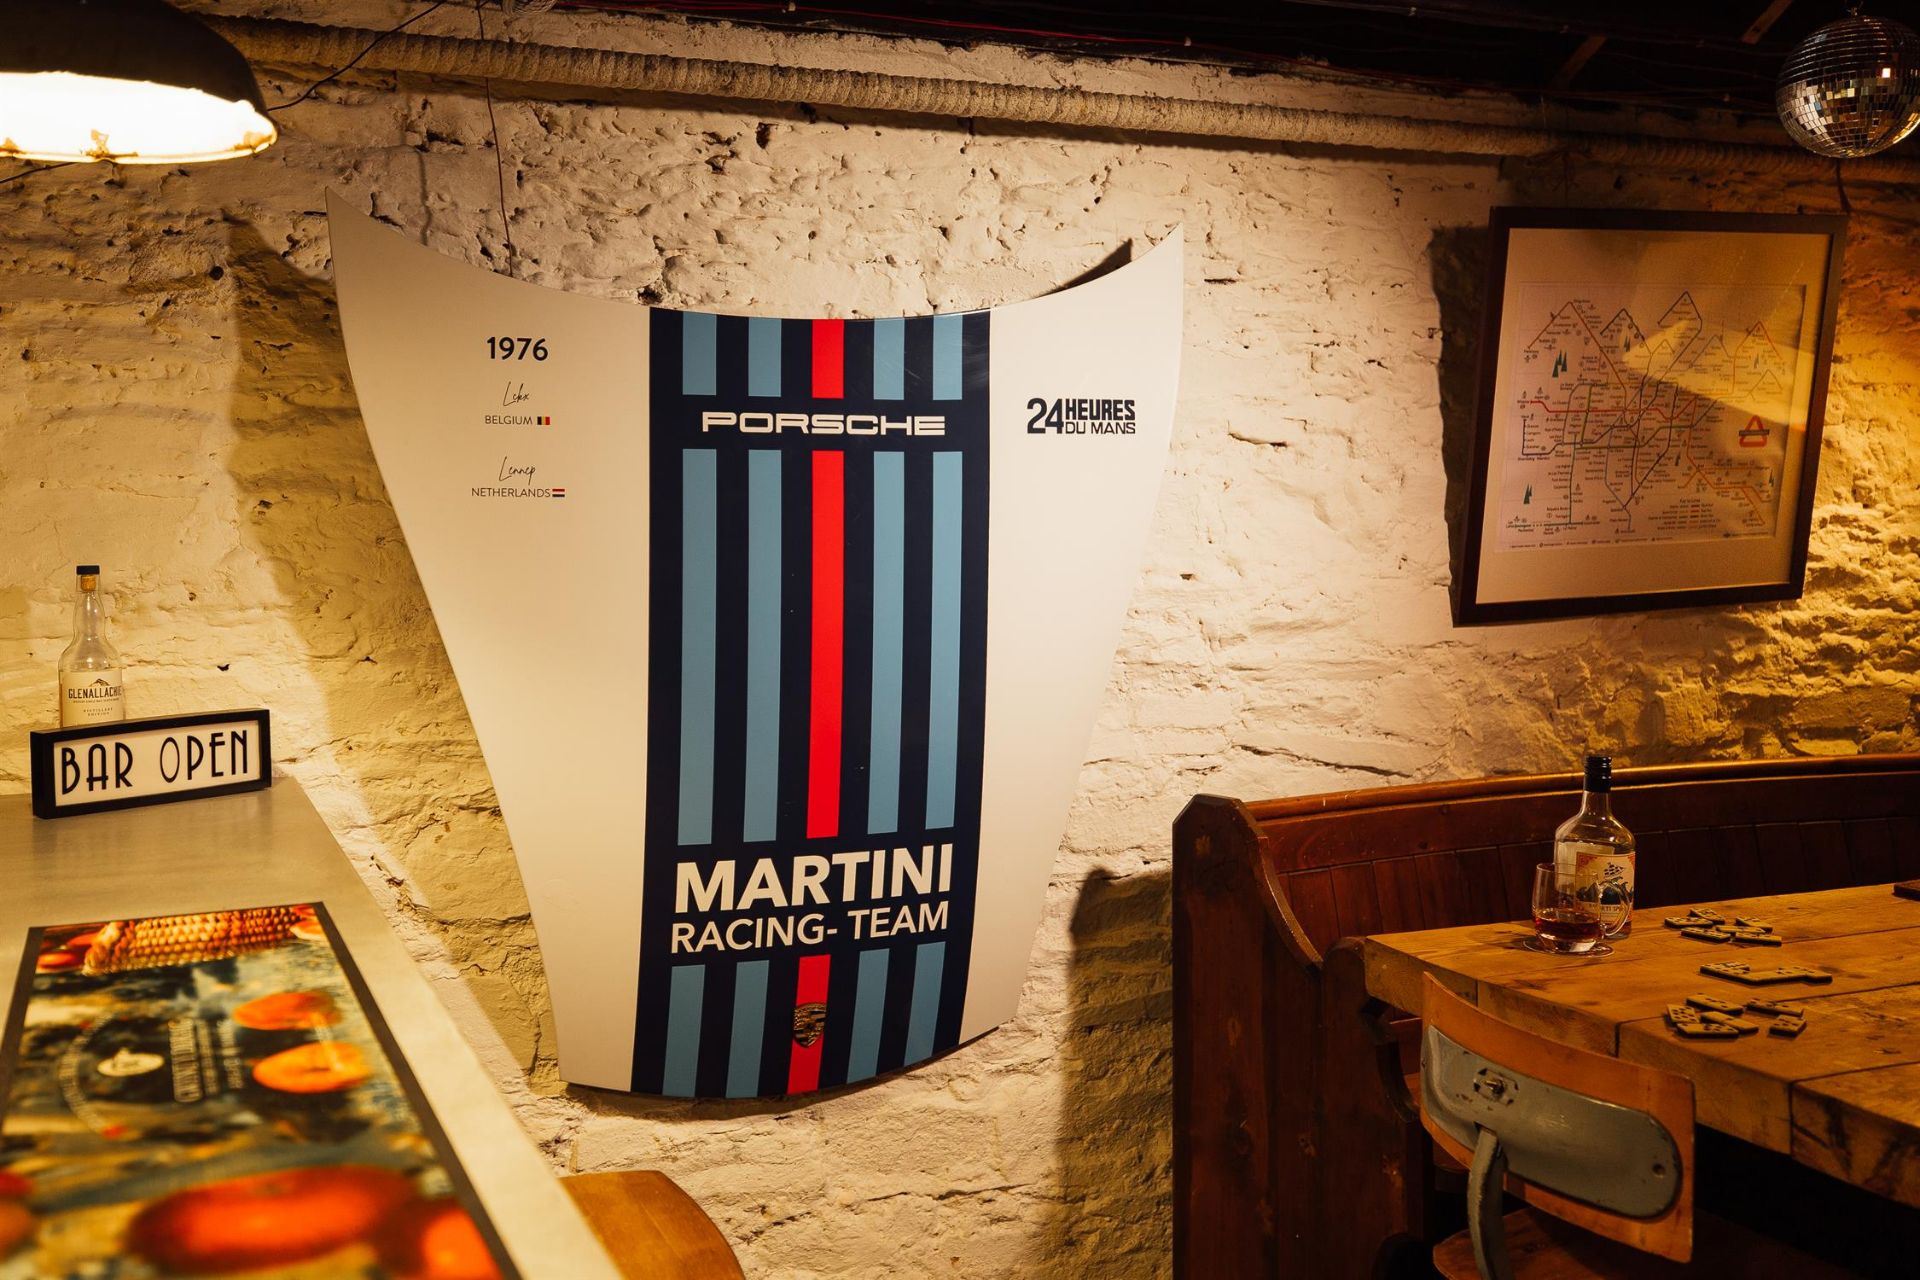 Martini Racing-Liveried Original Porsche 911 Bonnet Backlit Wall Display - Image 3 of 5